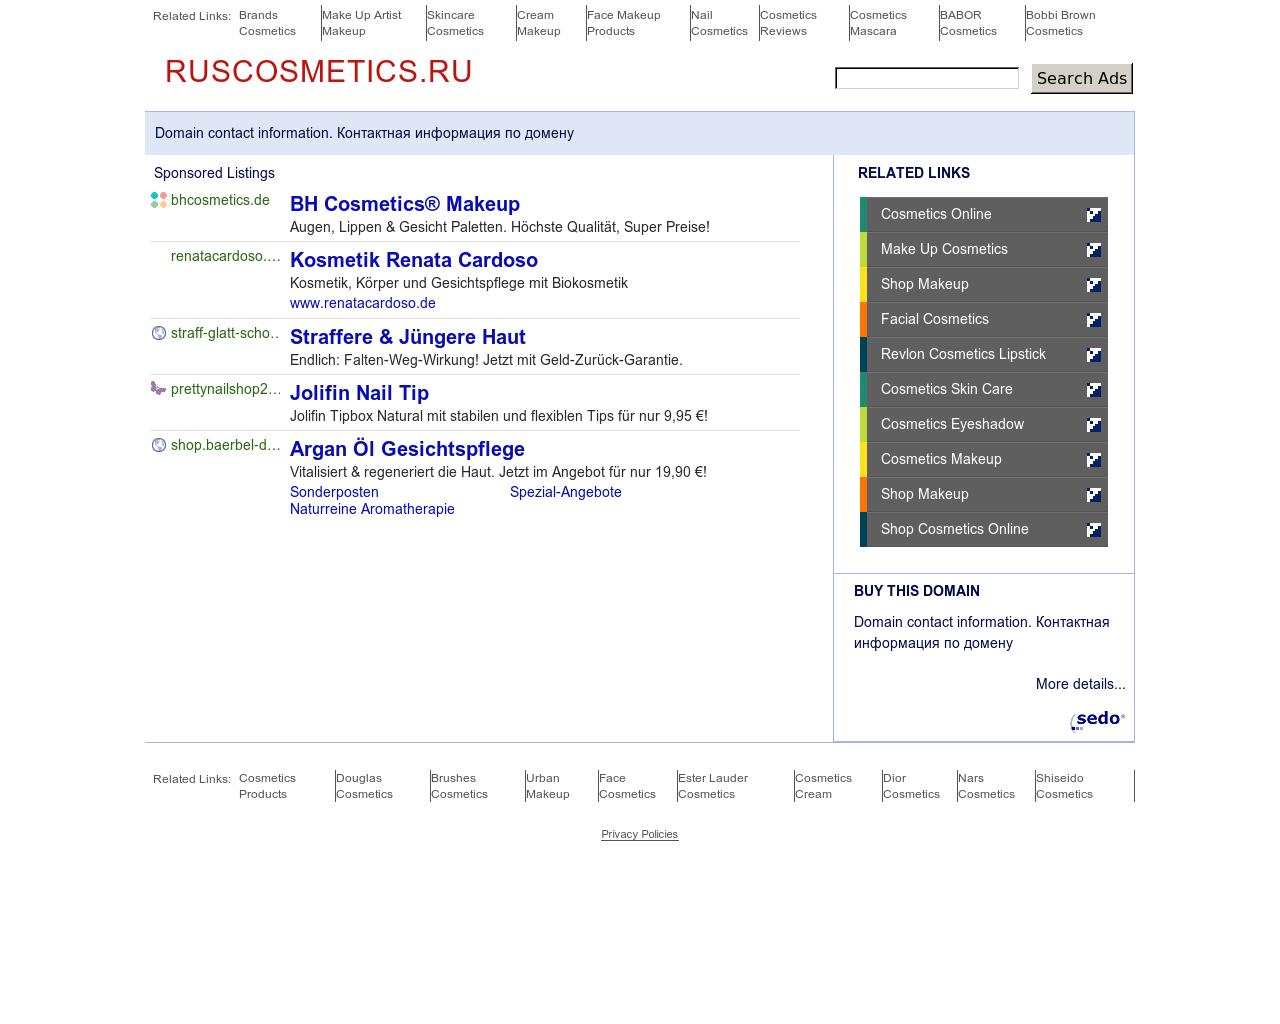 Изображение сайта ruscosmetics.ru в разрешении 1280x1024